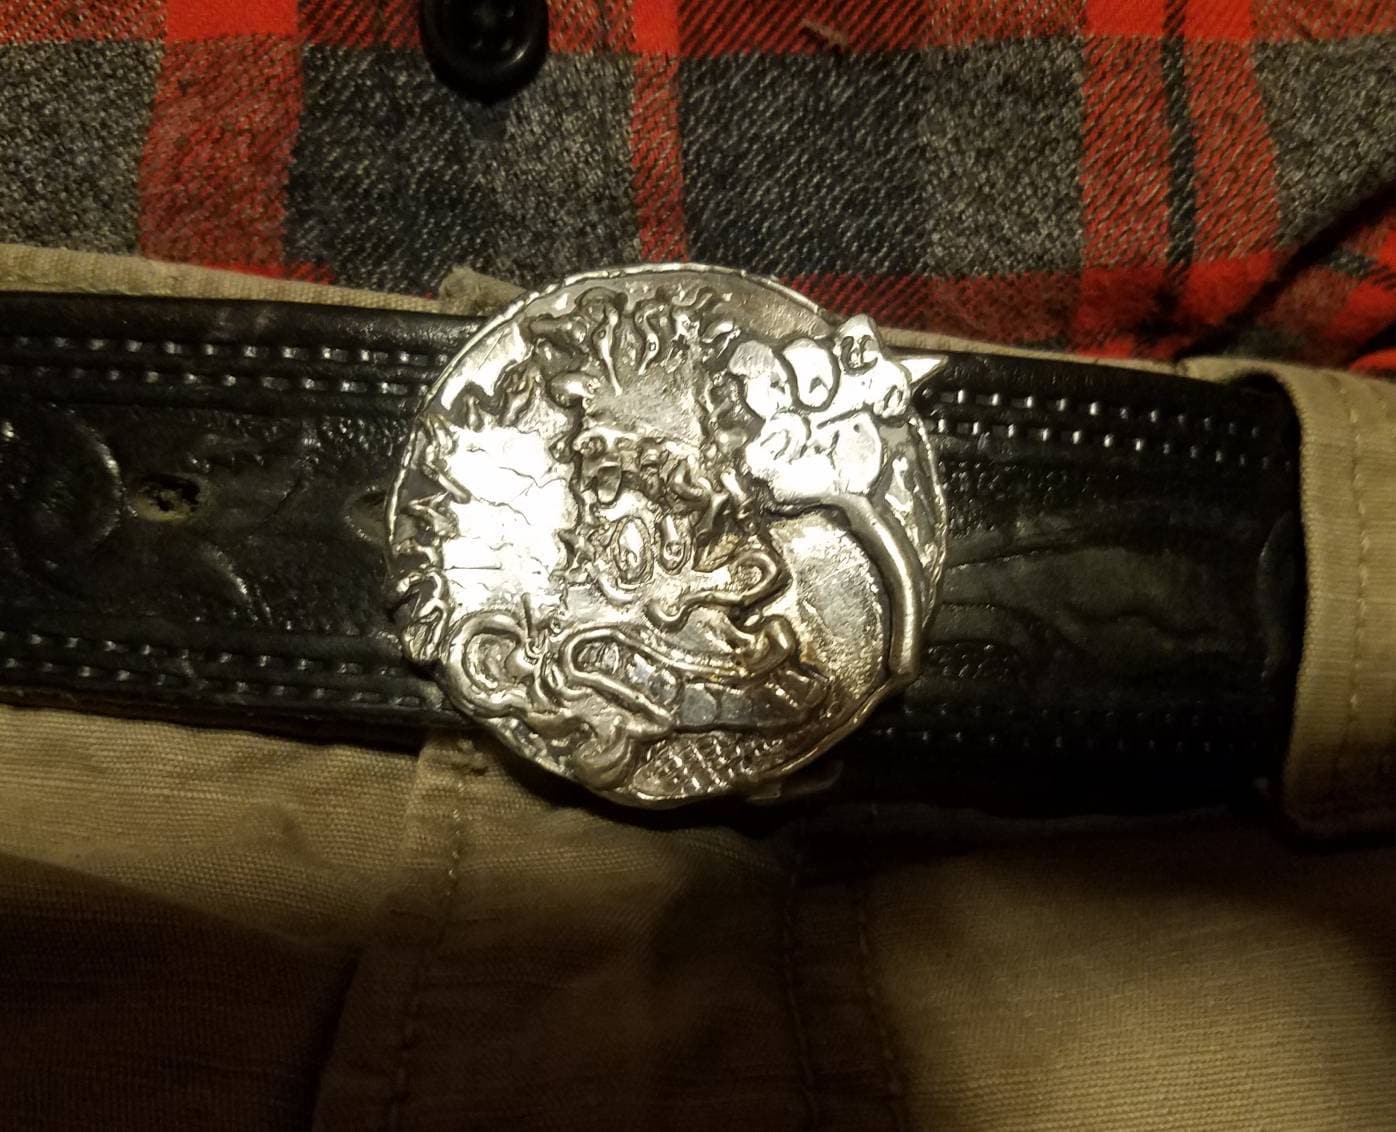 Grateful Dead Premium Leather Belt Embossed Stealie 28